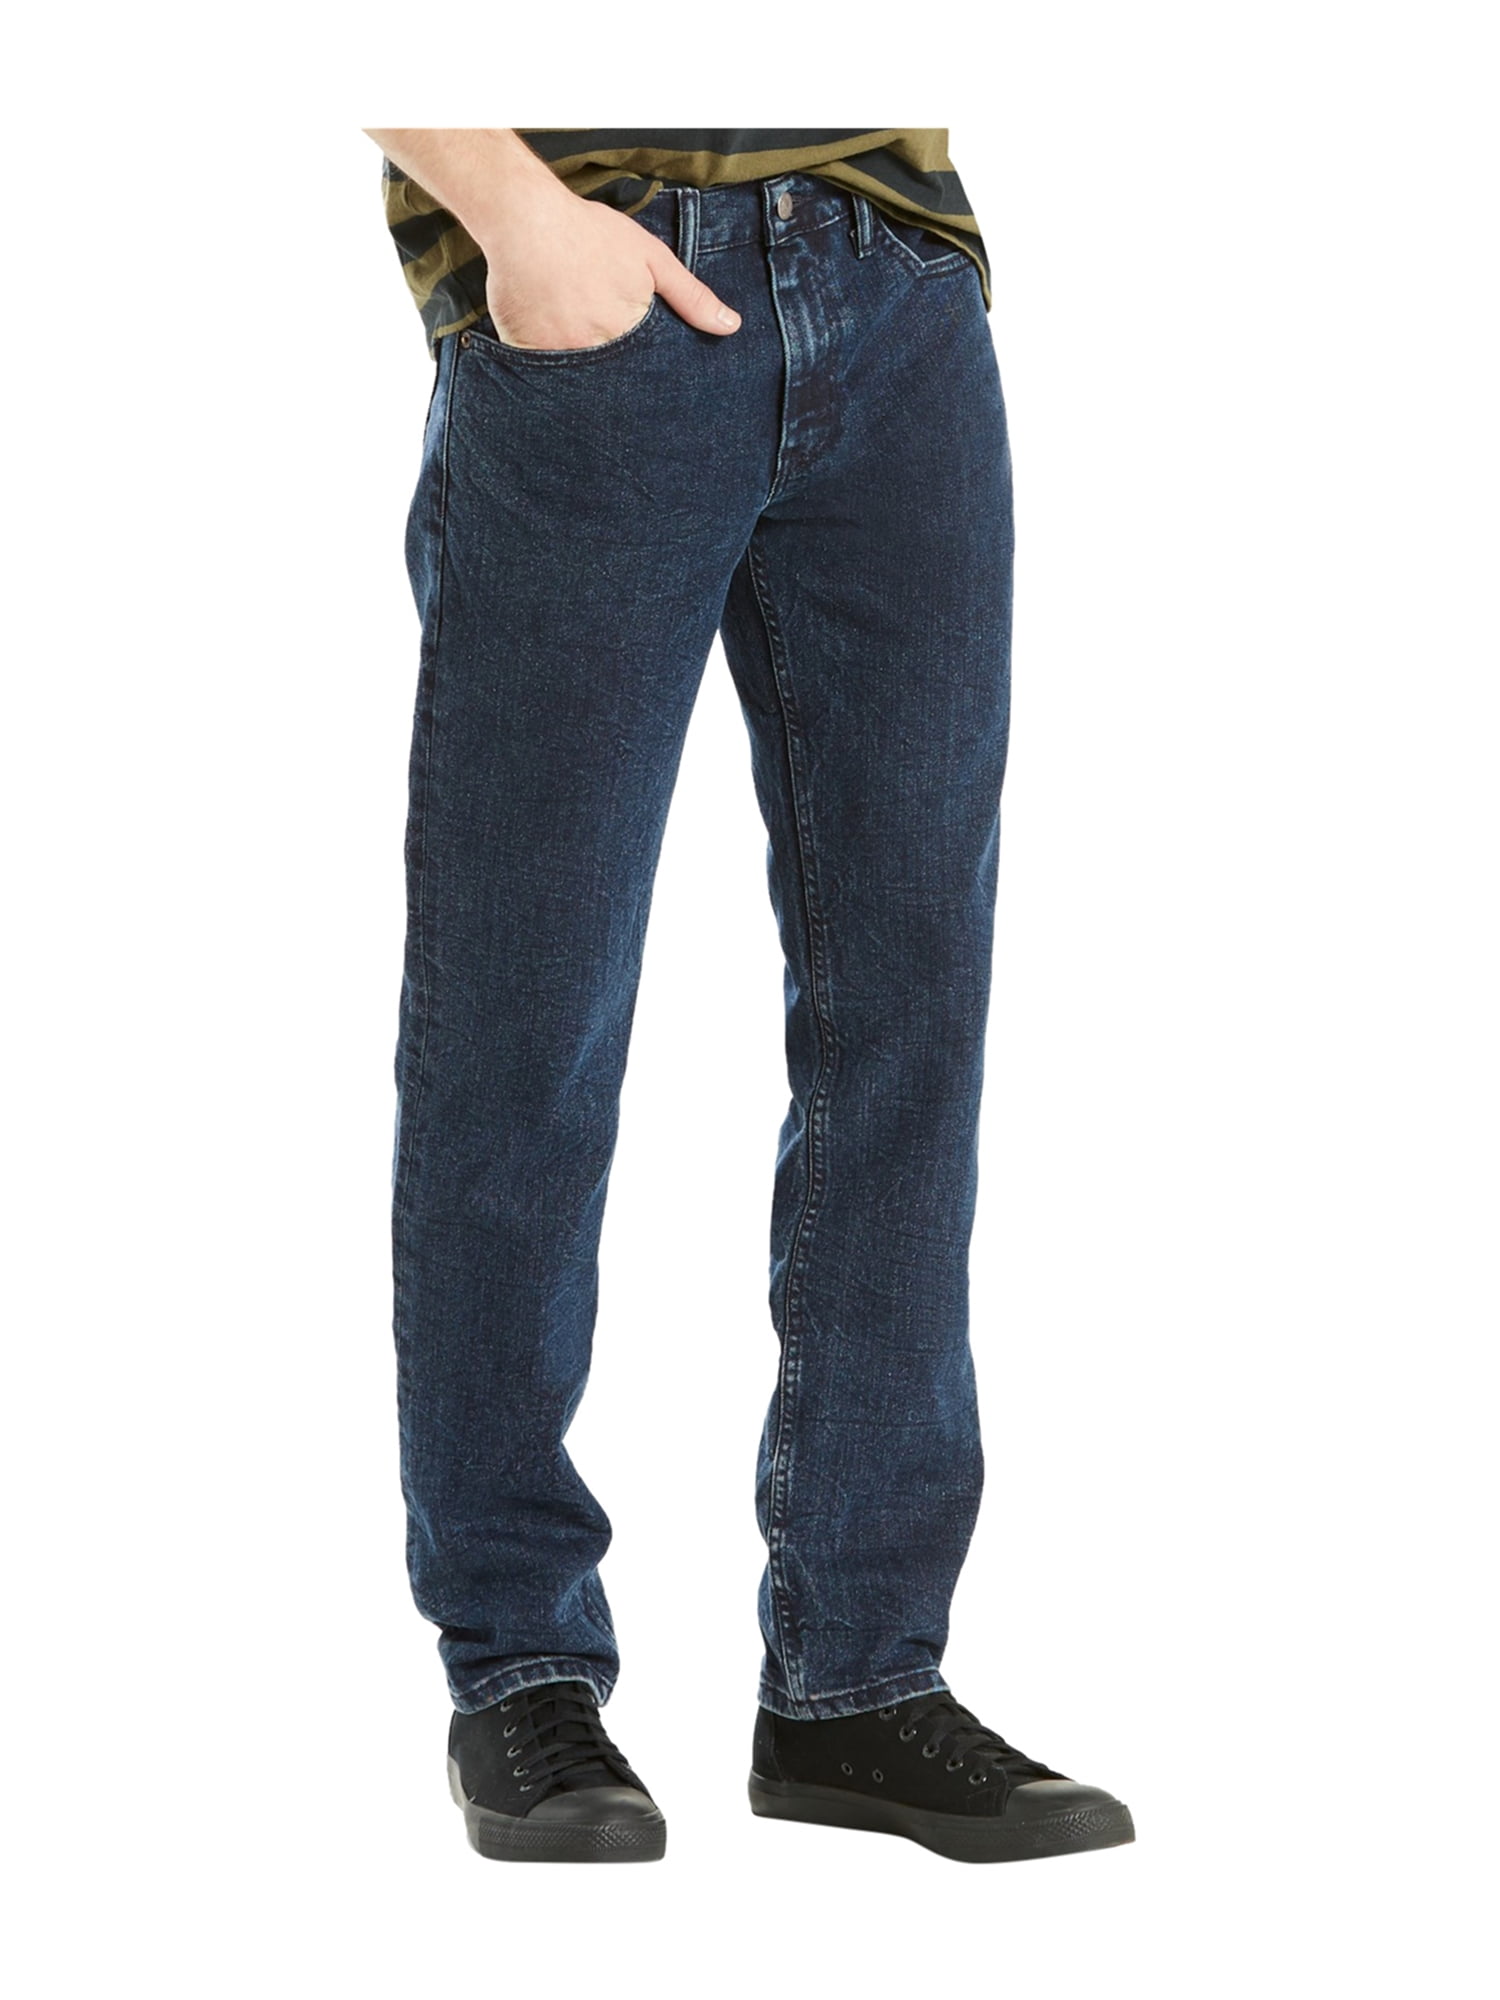 Levi's Mens 5 Pocket Slim Fit Stretch Jeans blue 31x32 | Walmart Canada